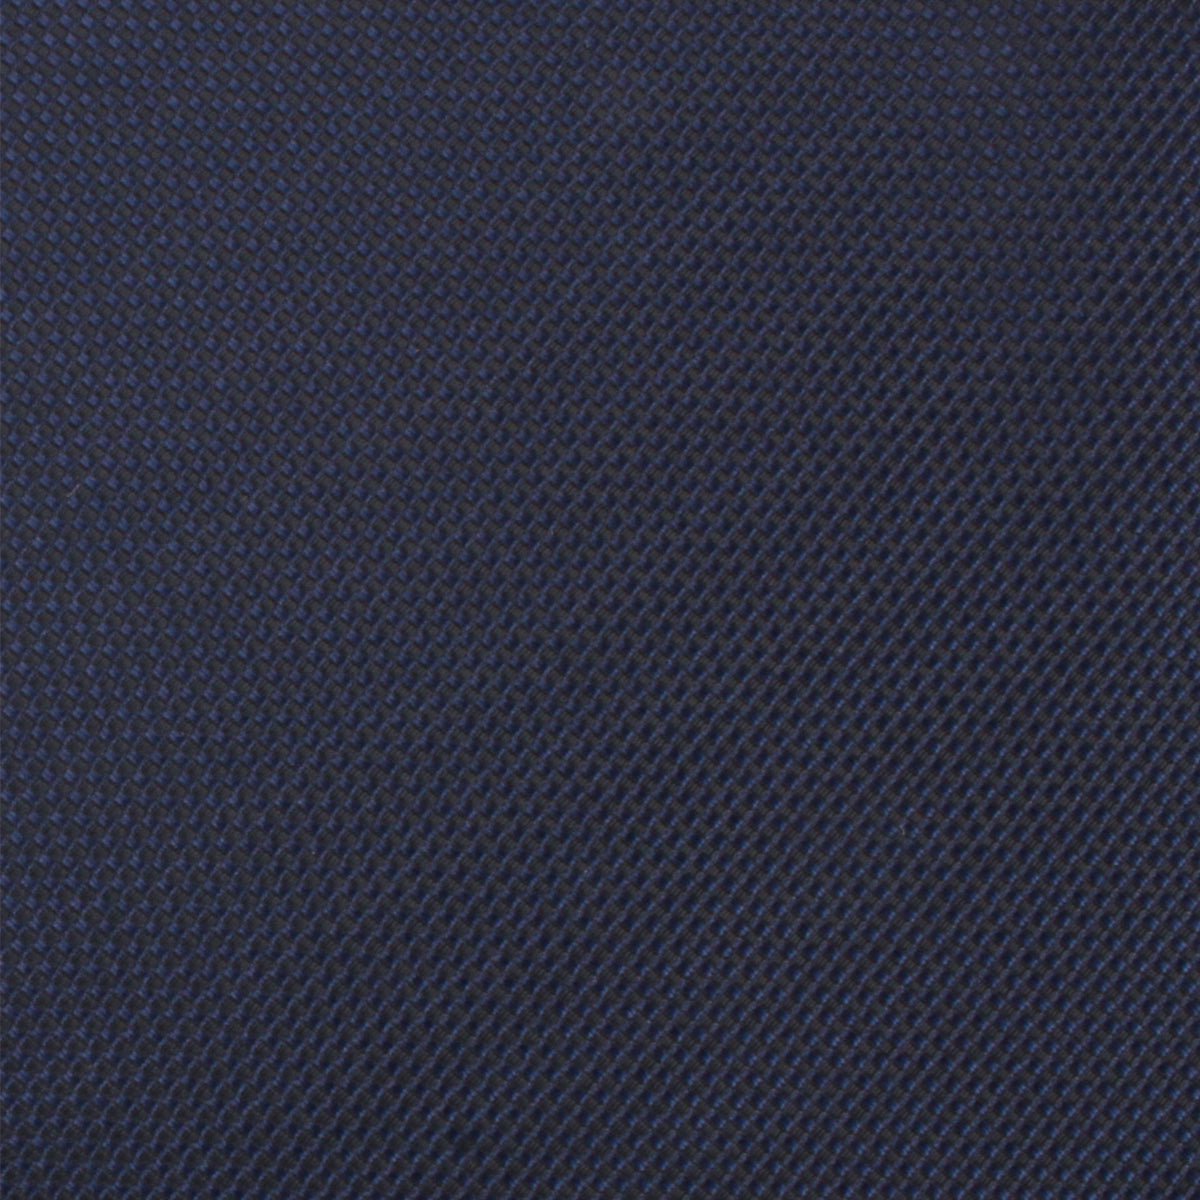 Navy Blue Oxford Stitch Fabric Swatch